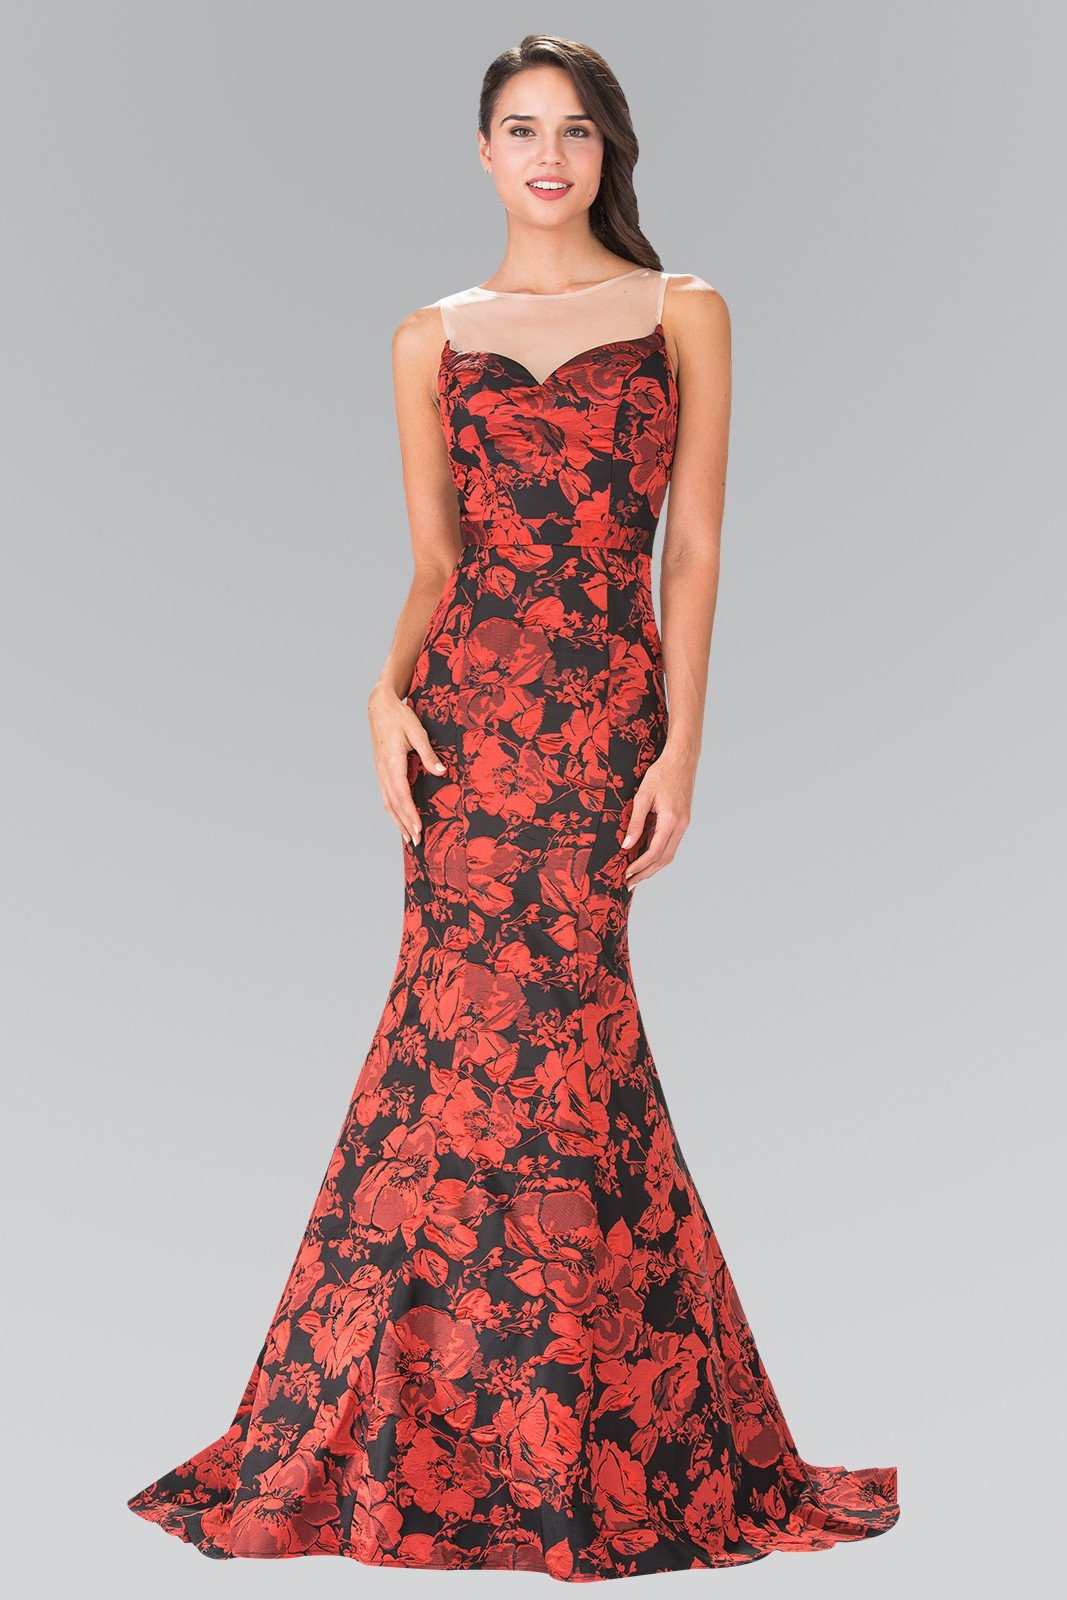 Red/Black Floral Print Dress with Sheer Neckline by Elizabeth K GL2246-Long Formal Dresses-ABC Fashion